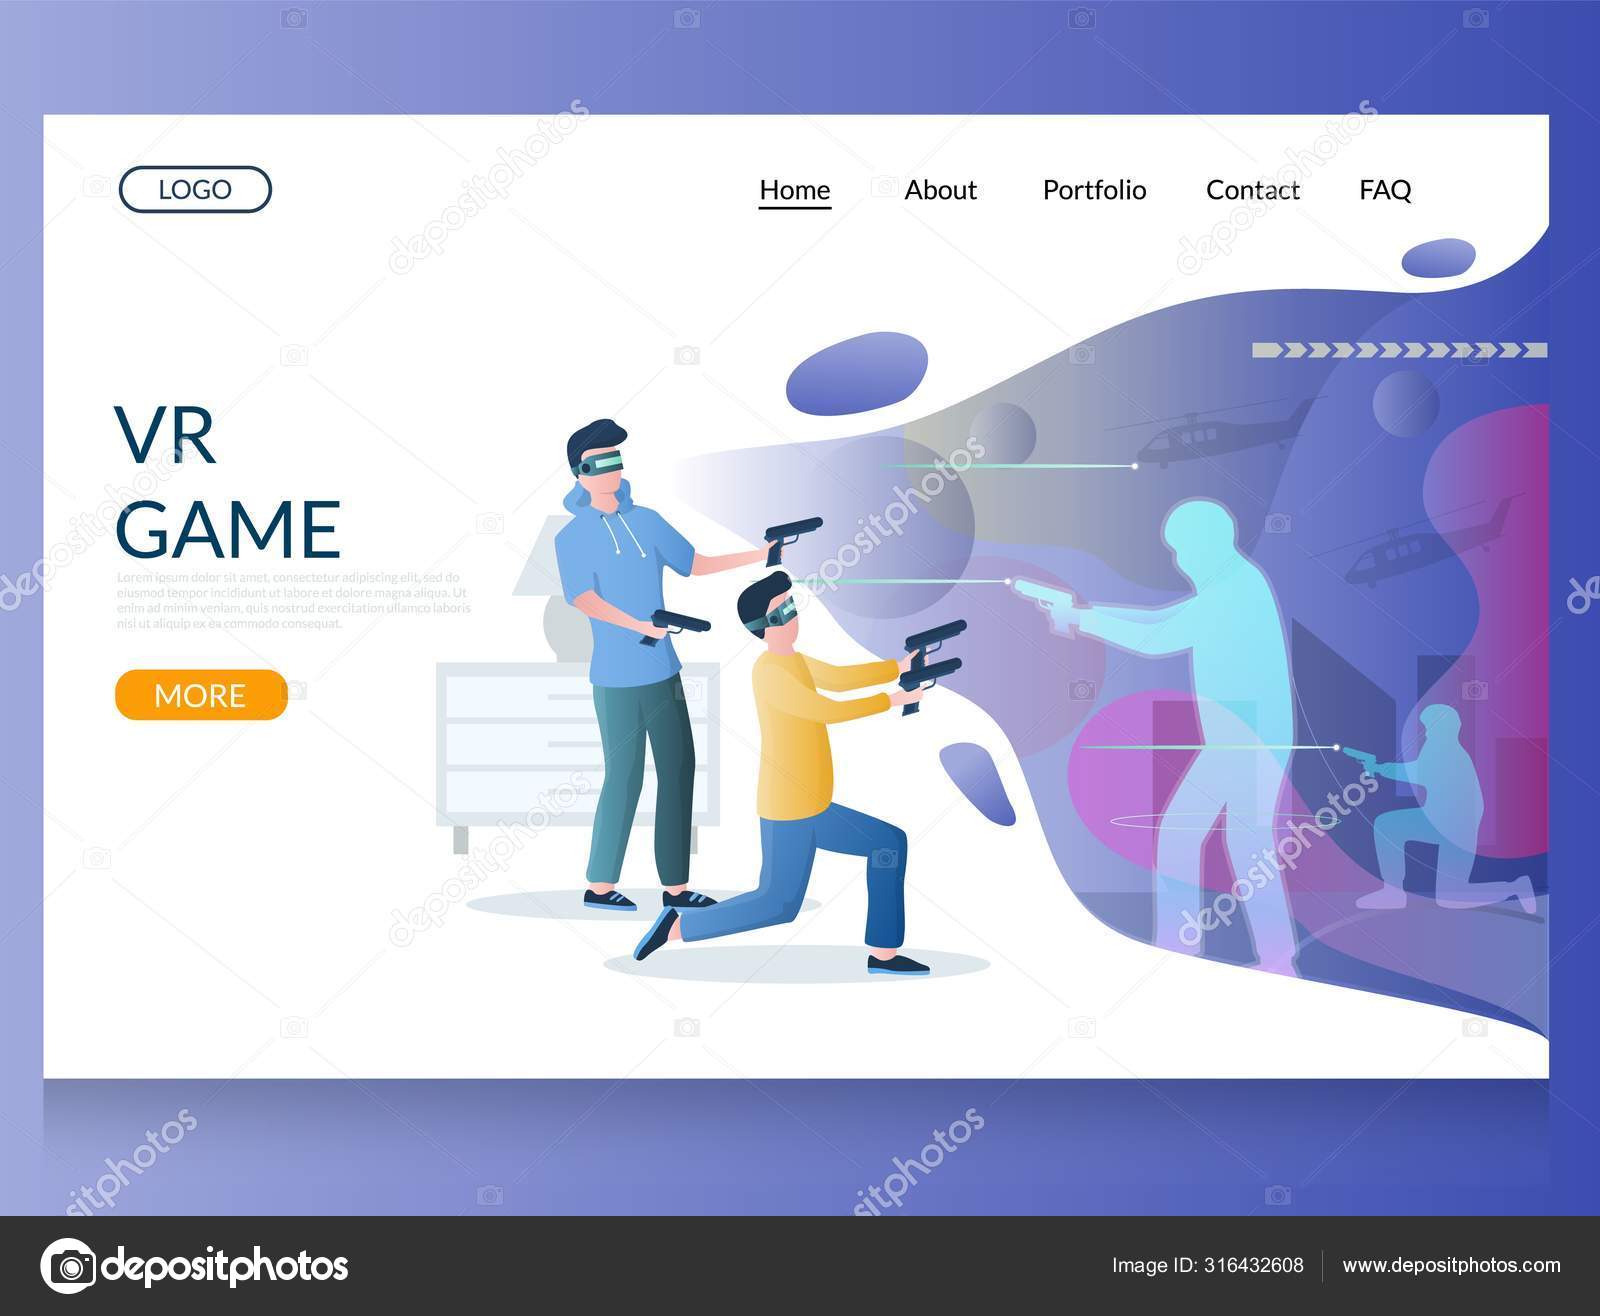 Game website landing page design template Vector Image